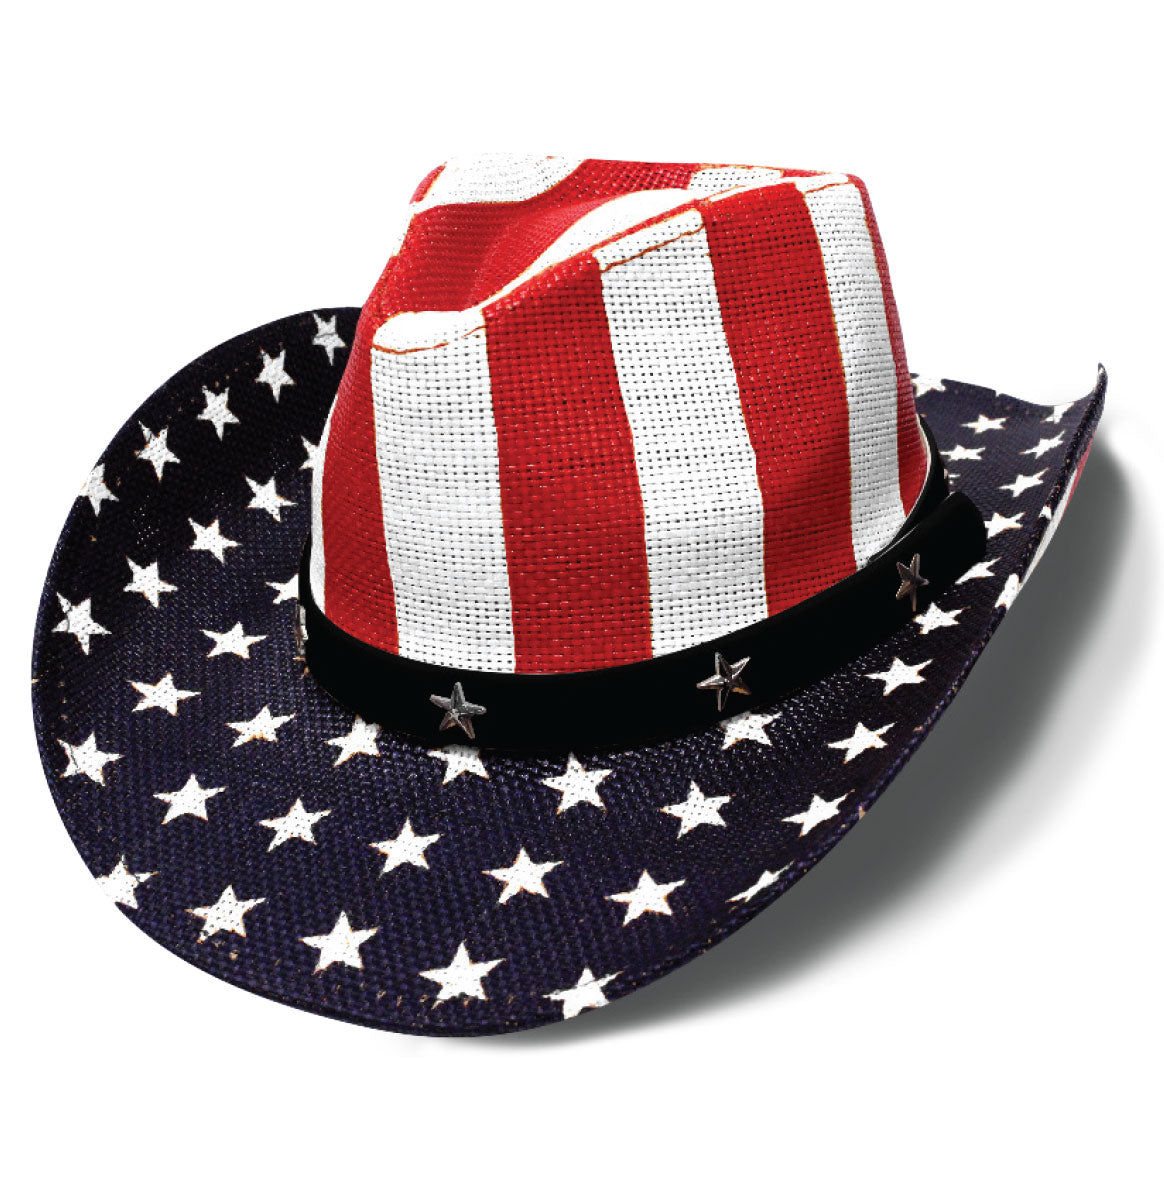 Straw Cowboy Hat - White Stripes & Stars